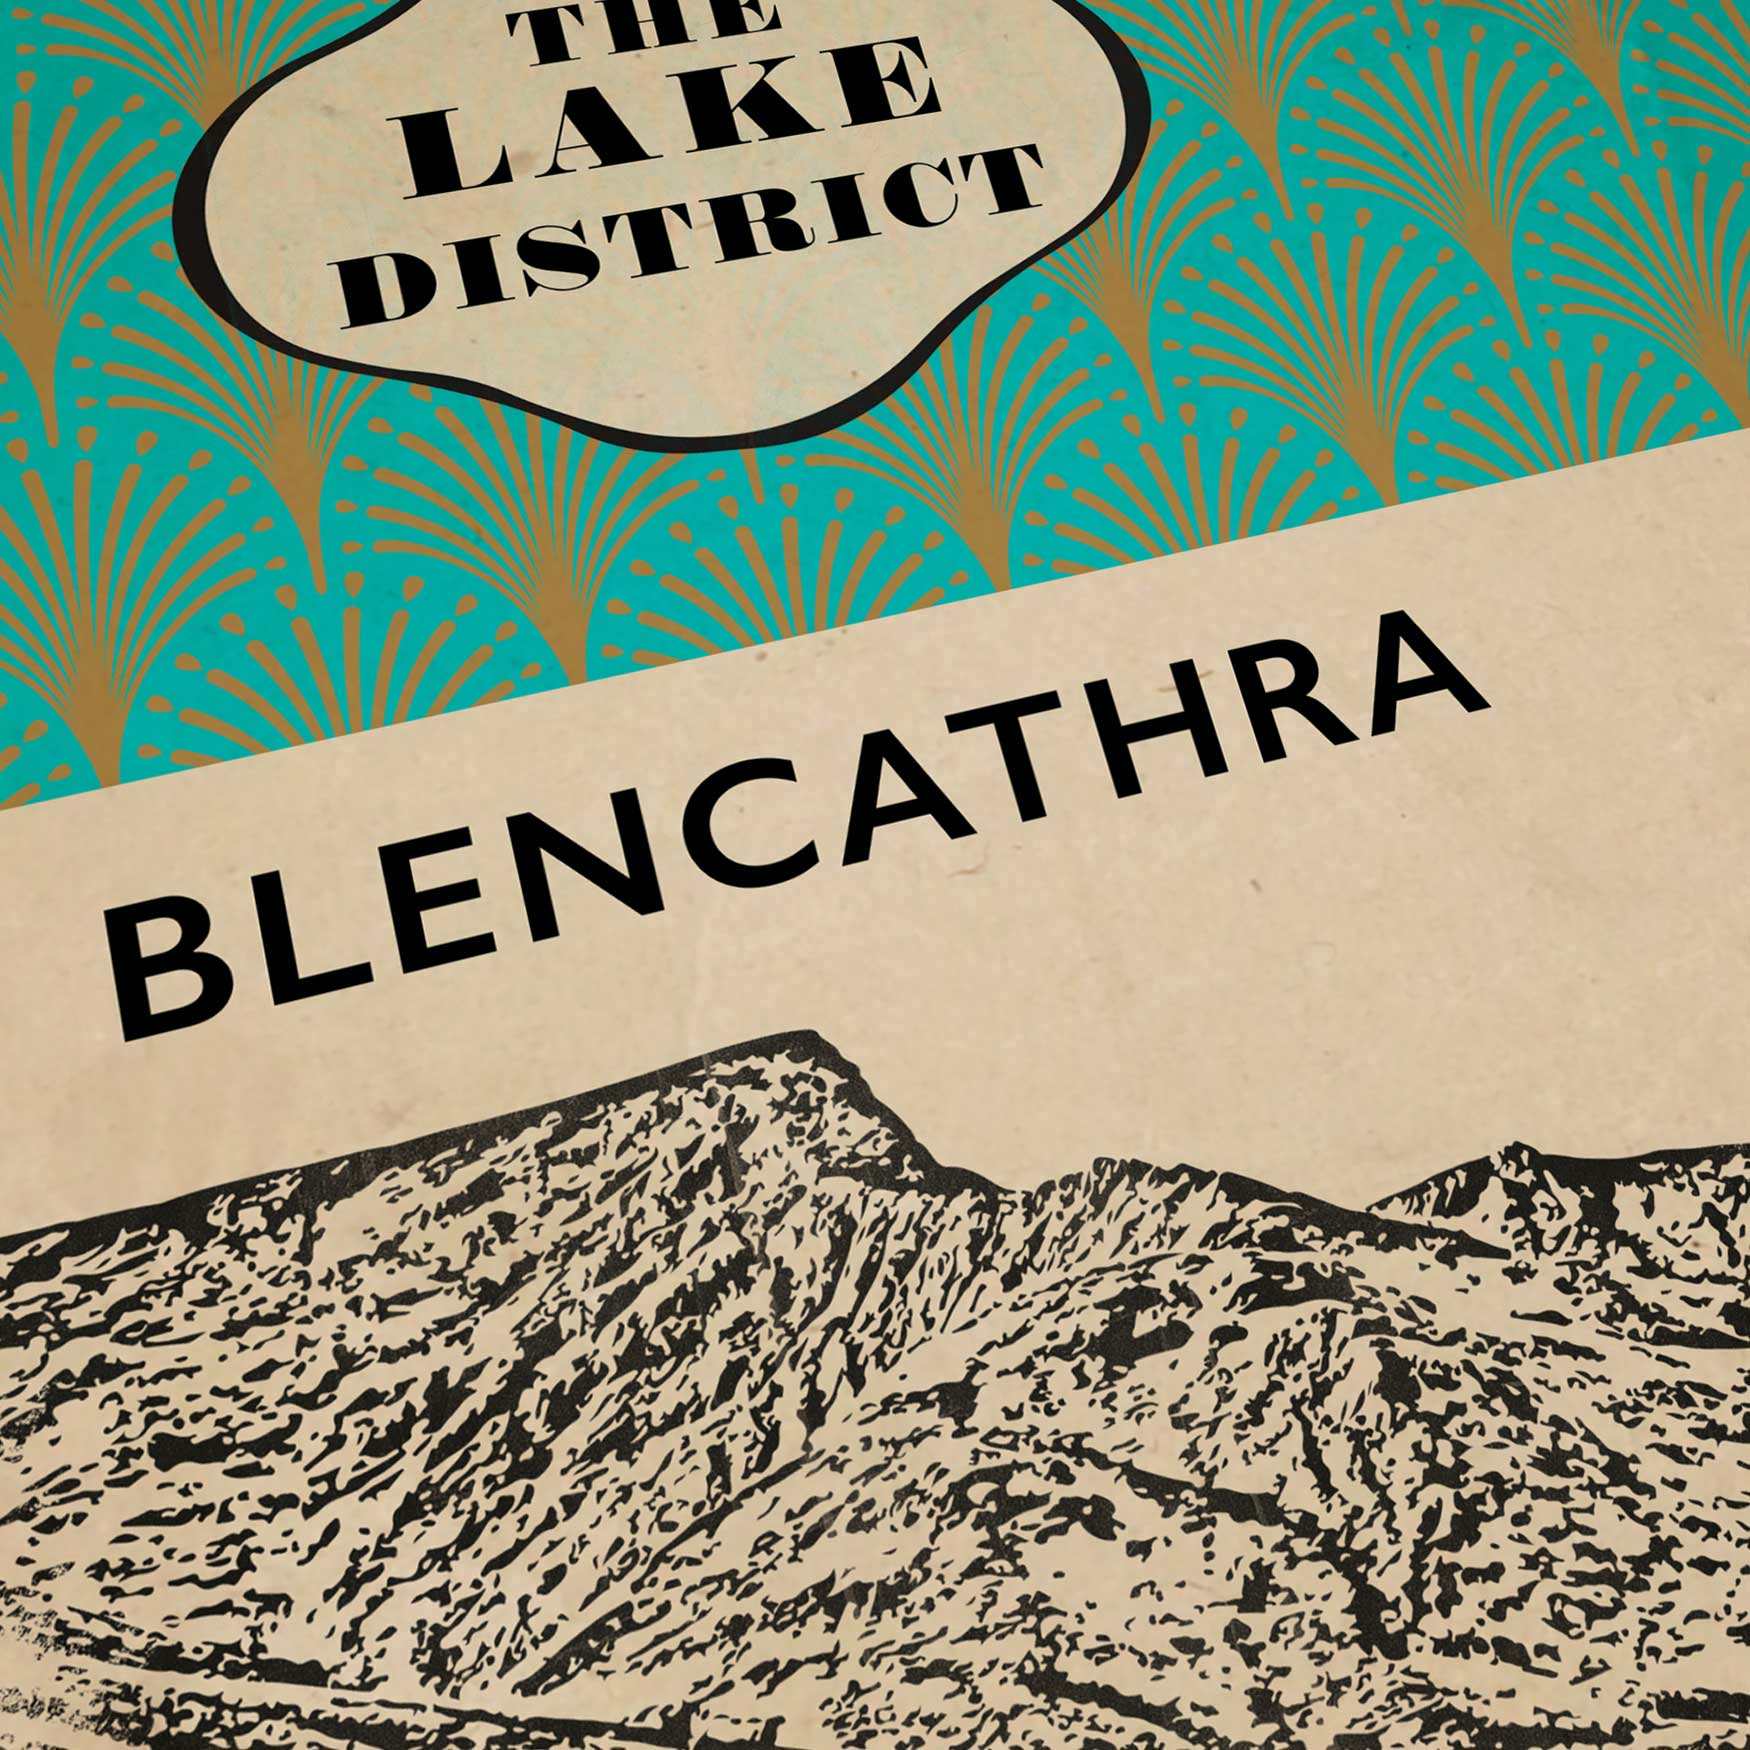 blencathra lake district fell vintage style poster print book jacket style